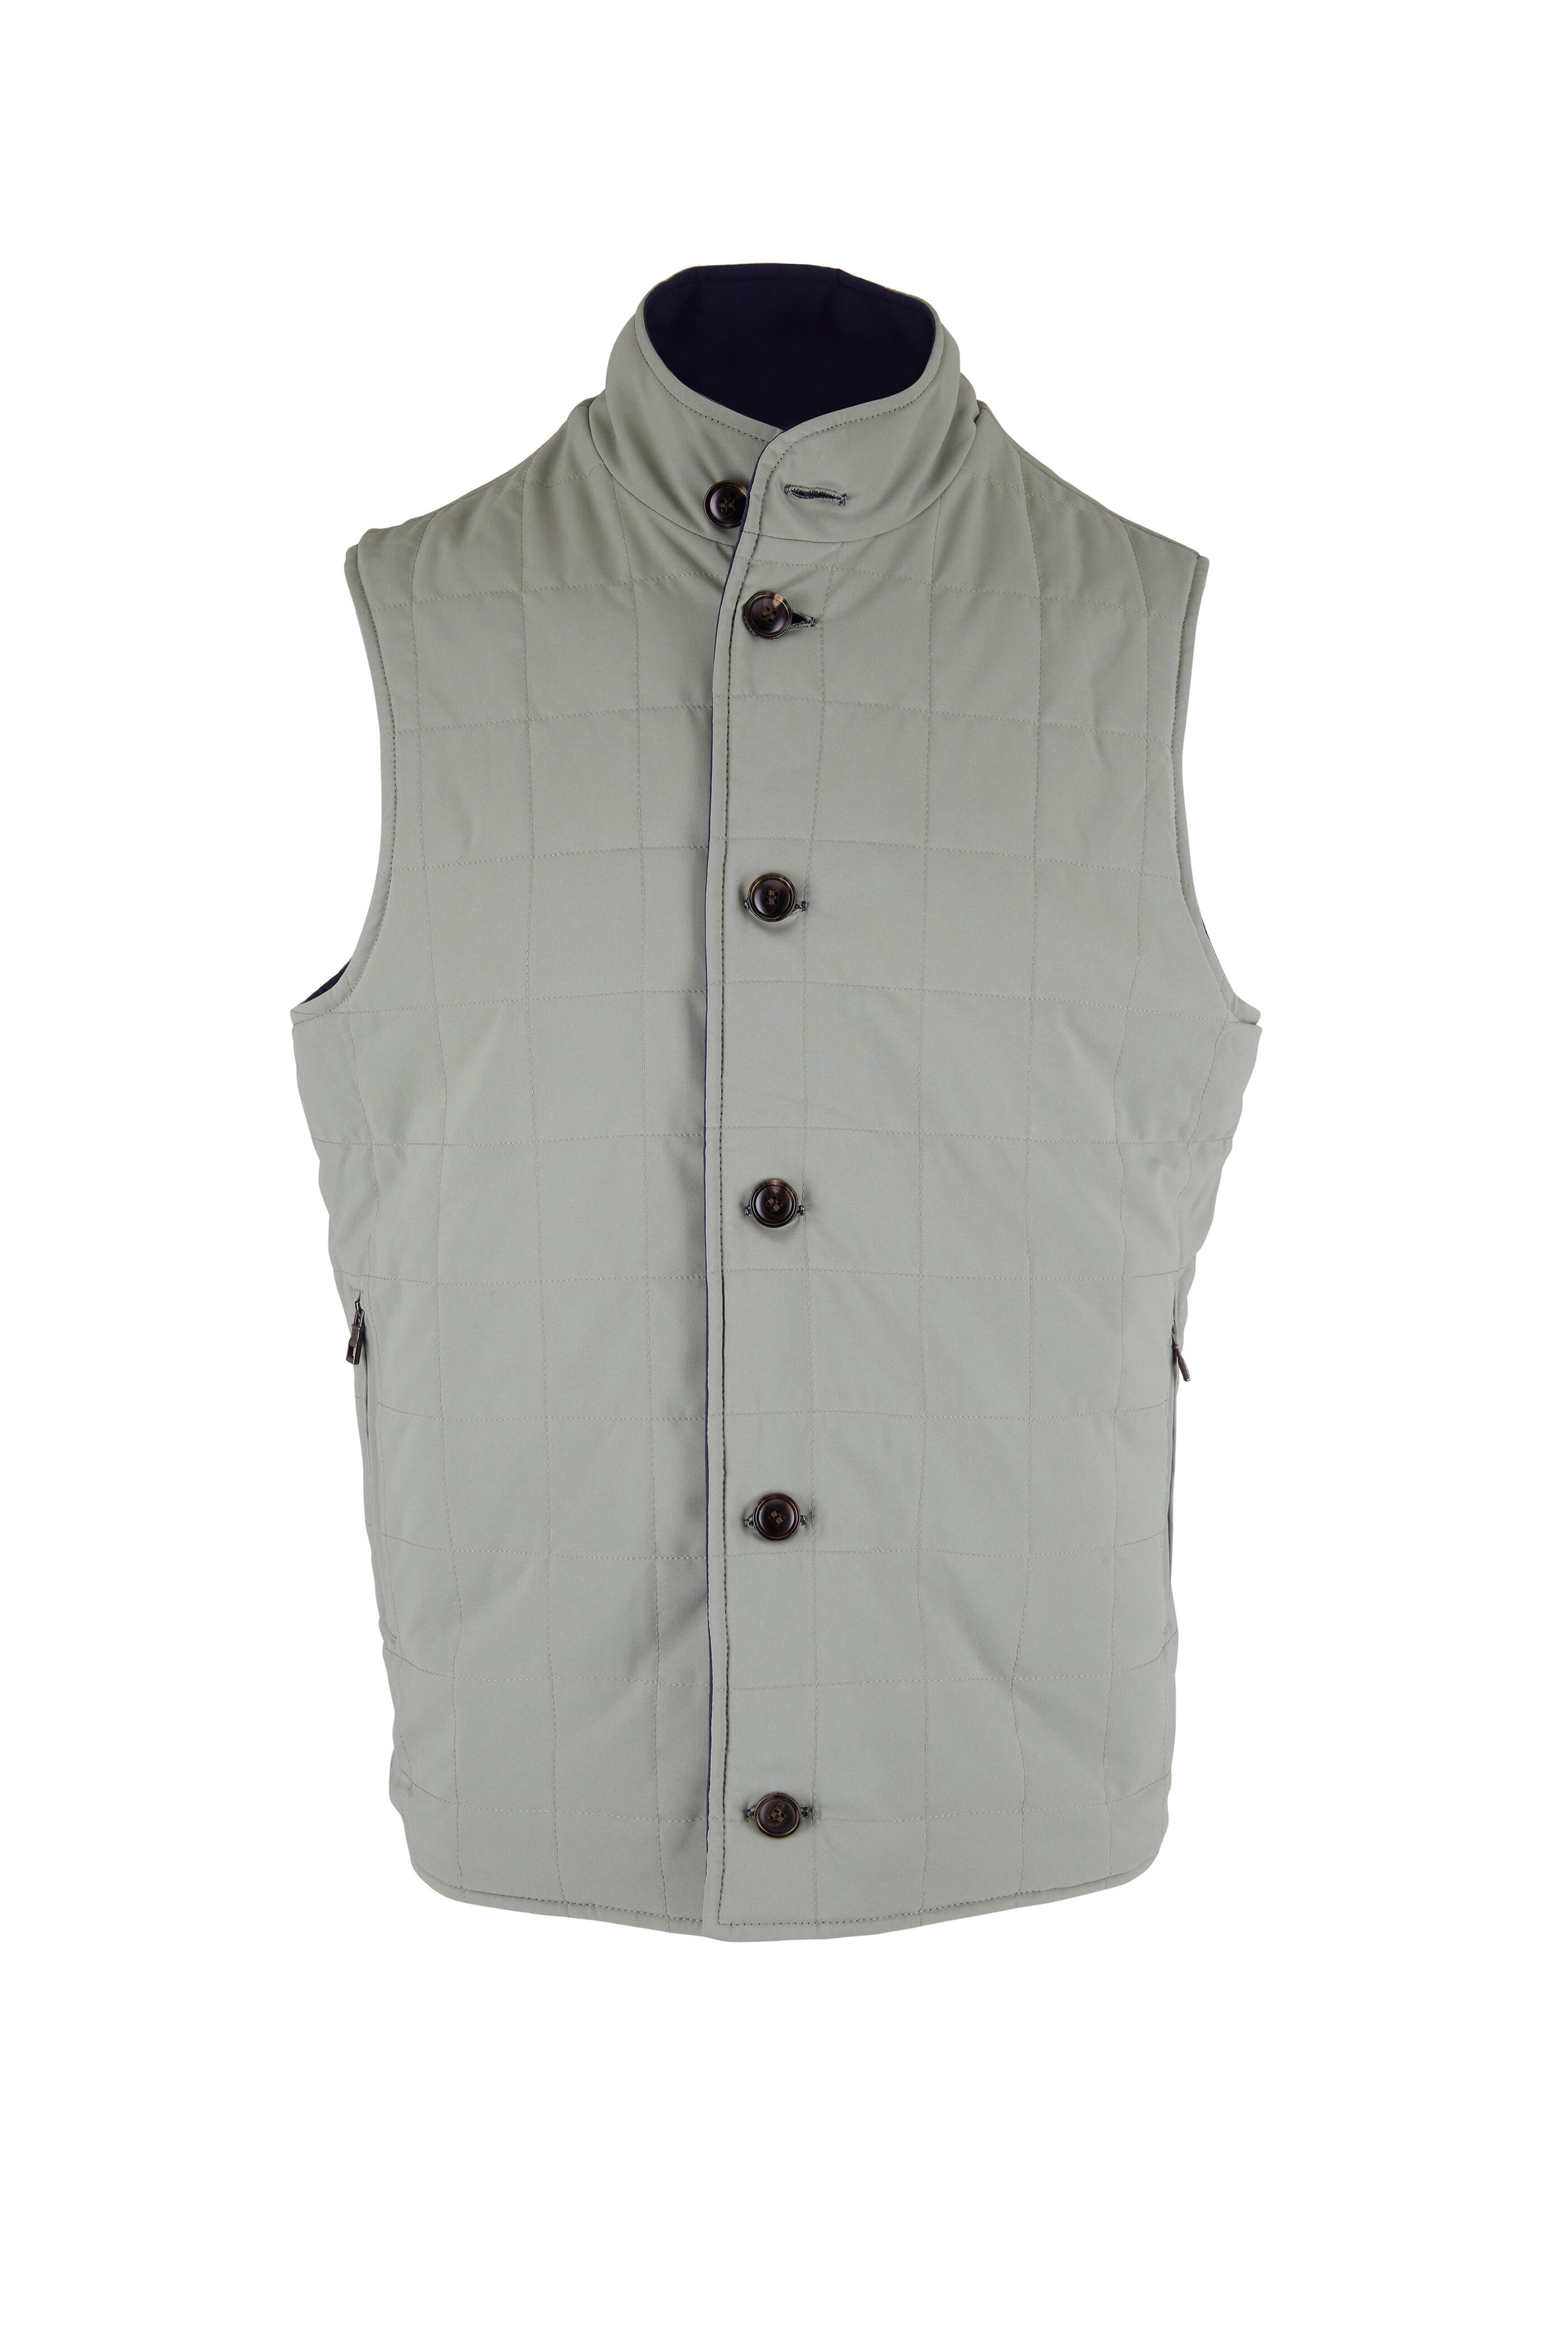 Peter Millar - Navy & Green Reversible Soft Vest